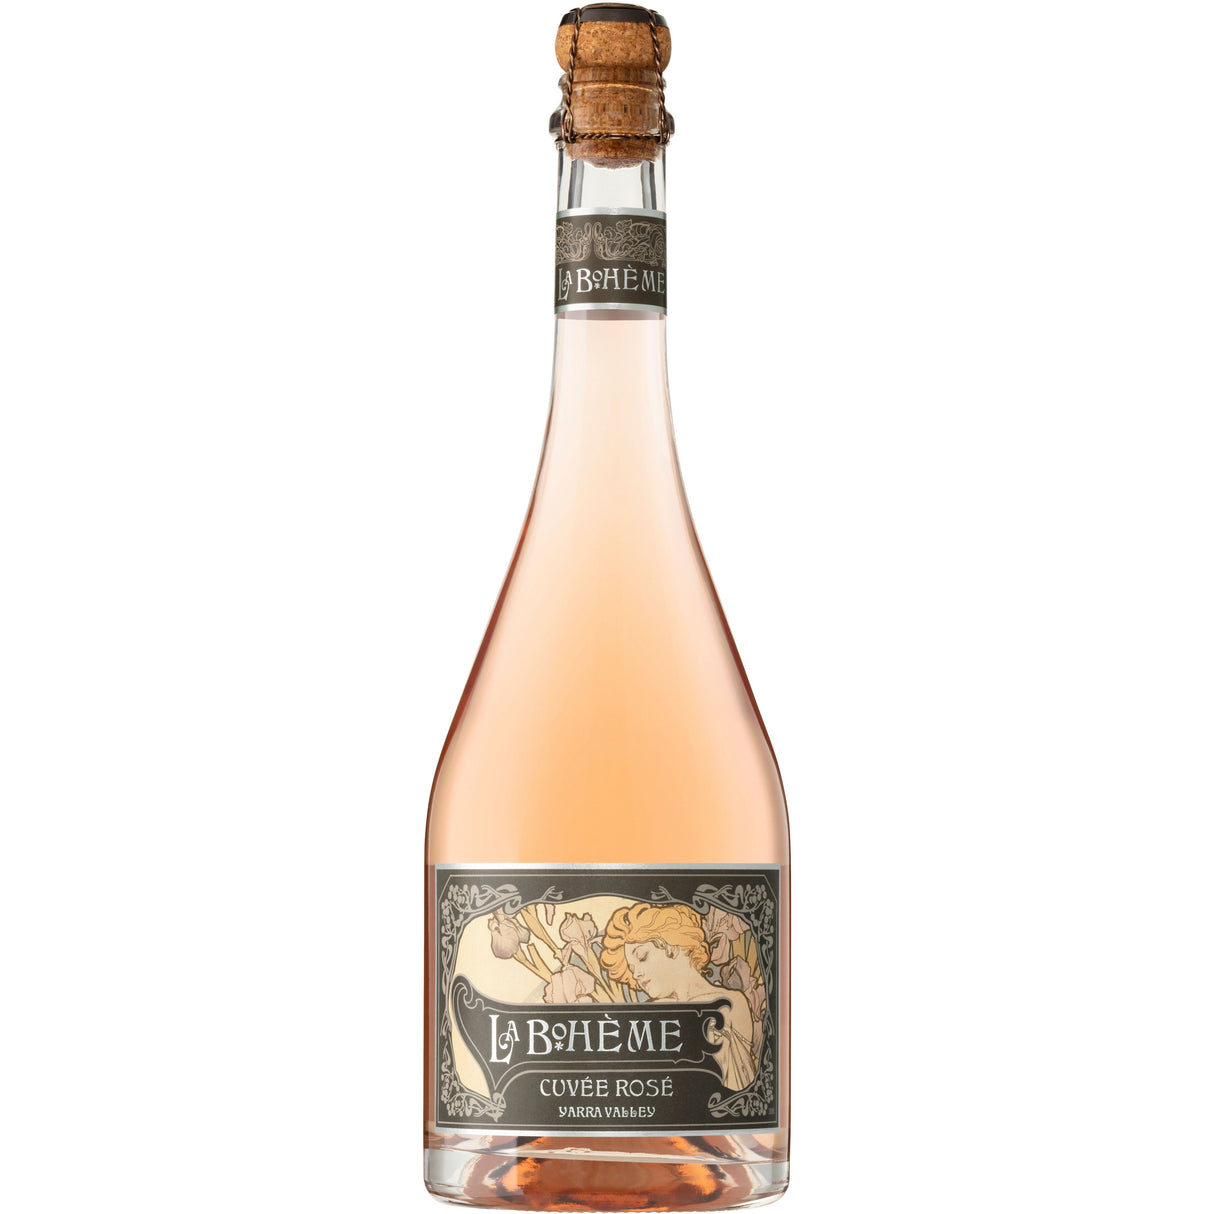 La Boheme Cuvee Rose NV (12 Bottles)